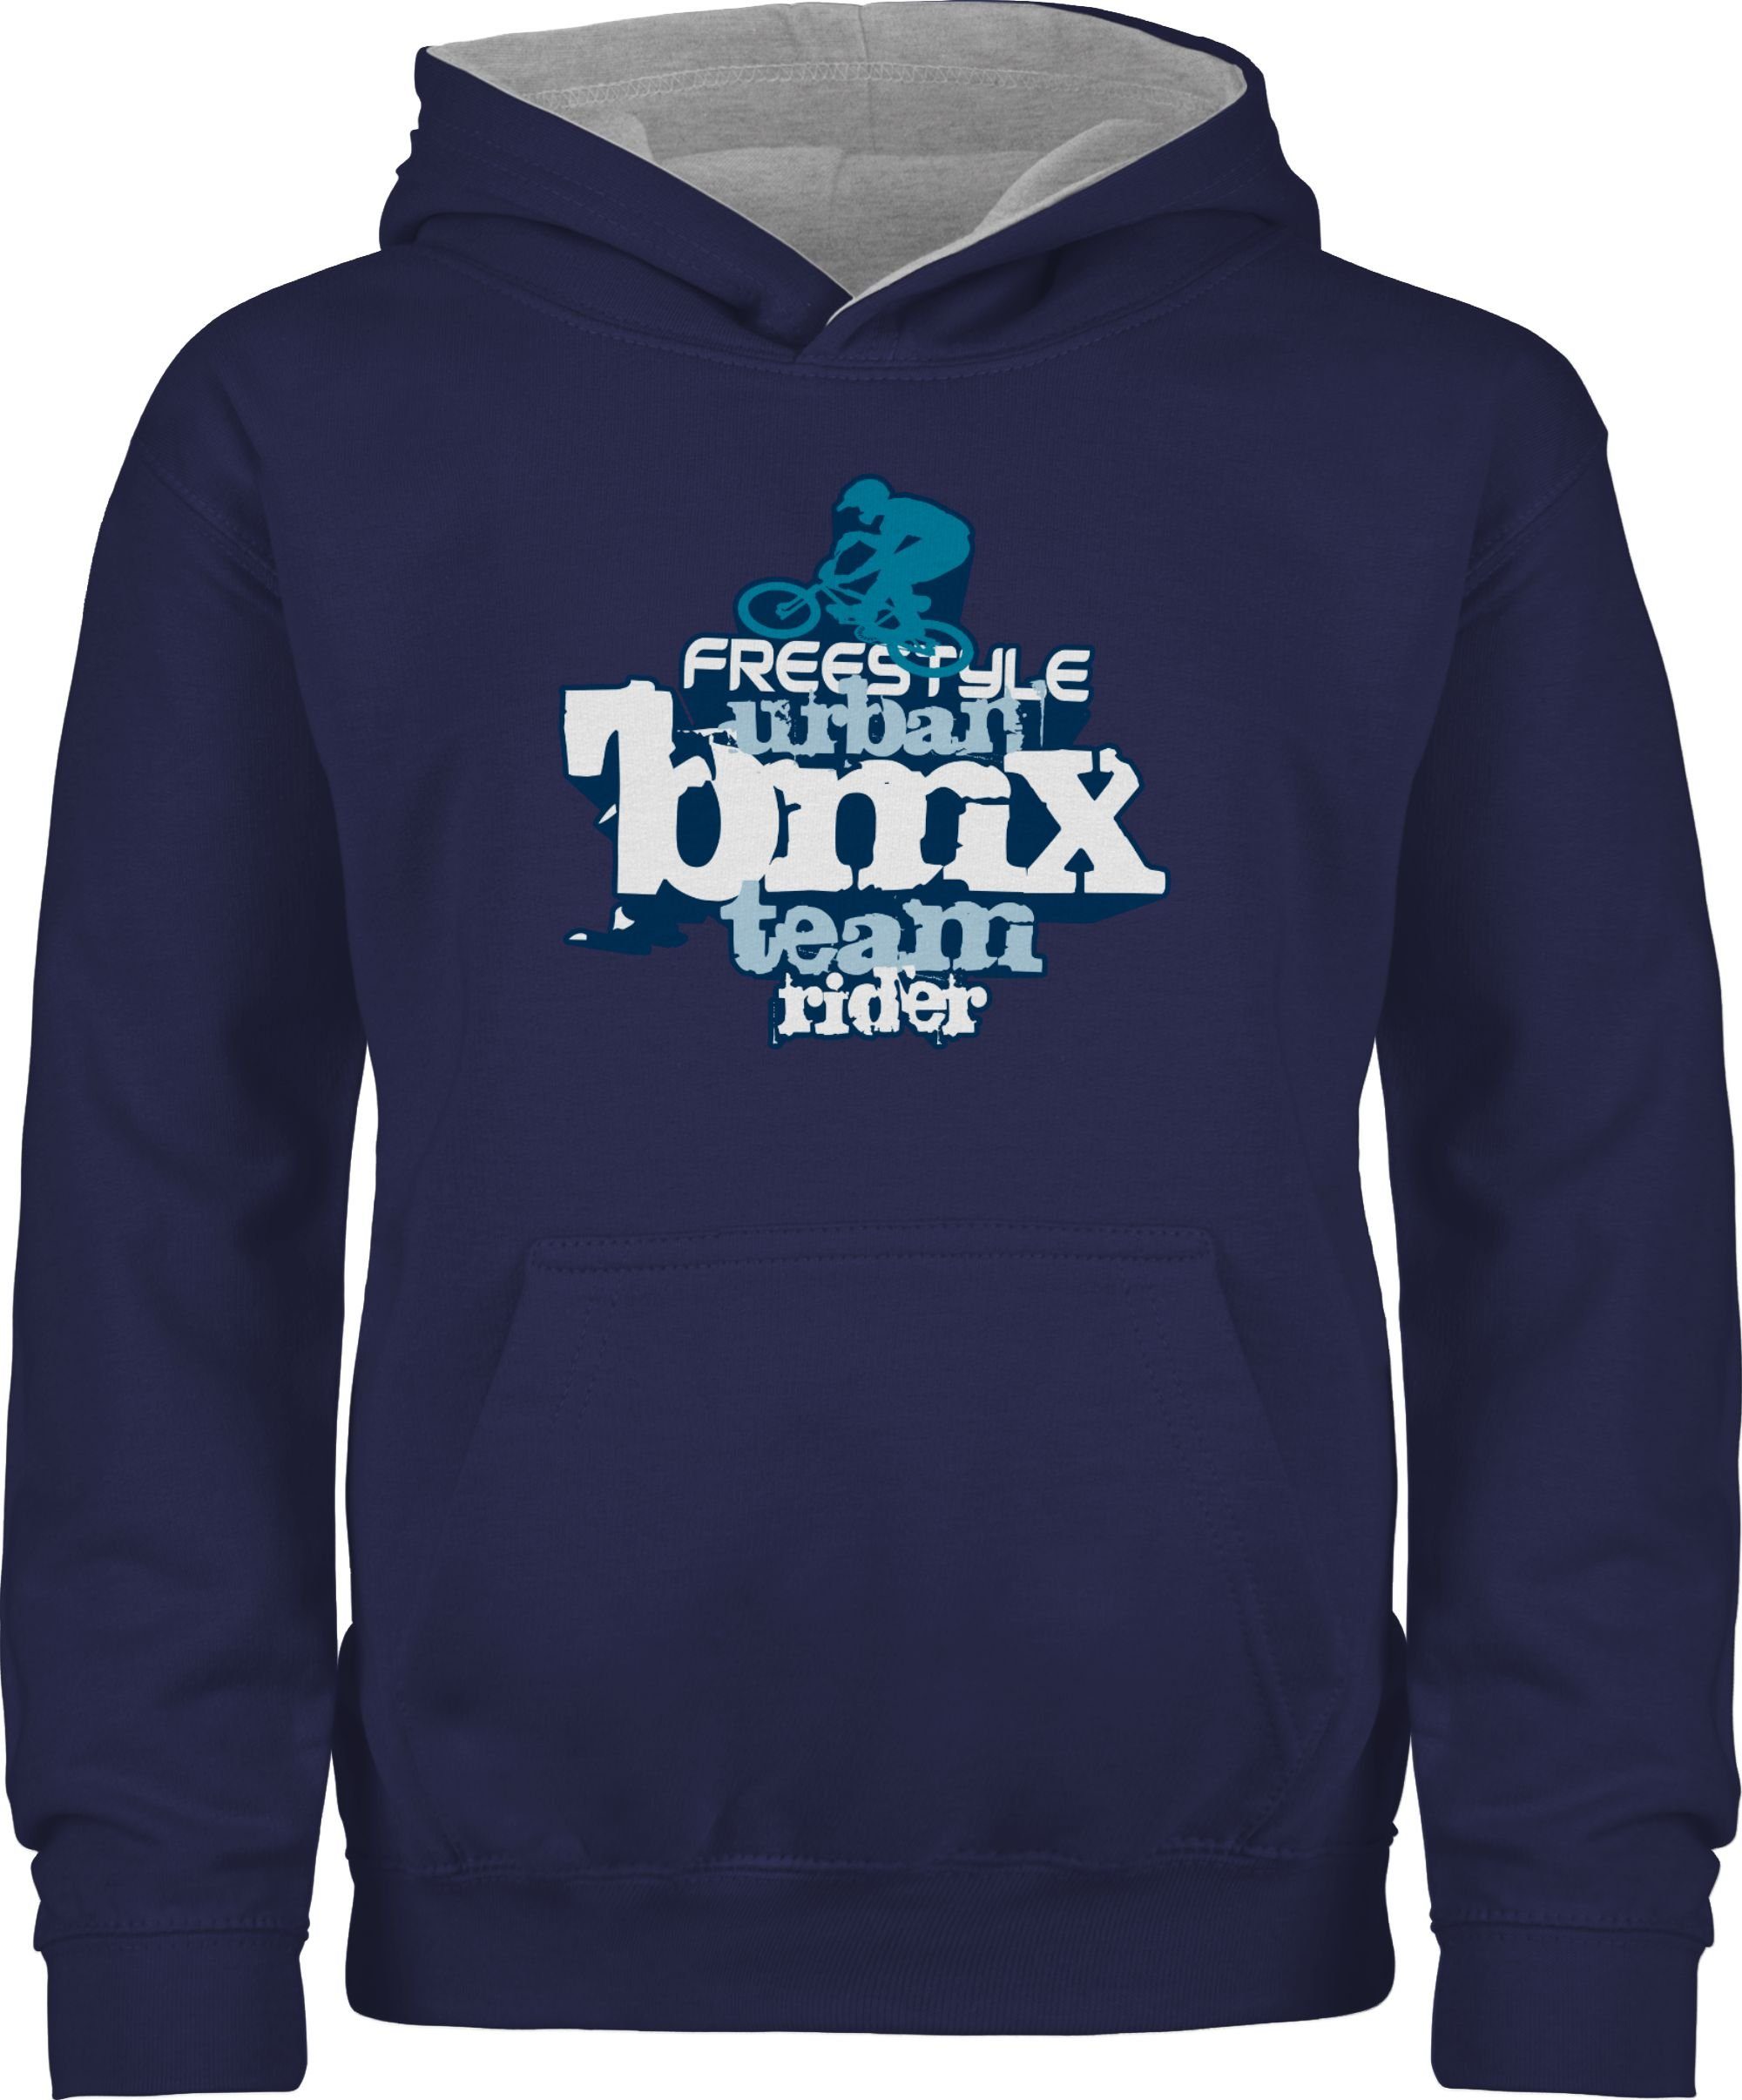 Shirtracer Hoodie BMX Kinder Sport Kleidung 1 Navy Blau/Grau meliert